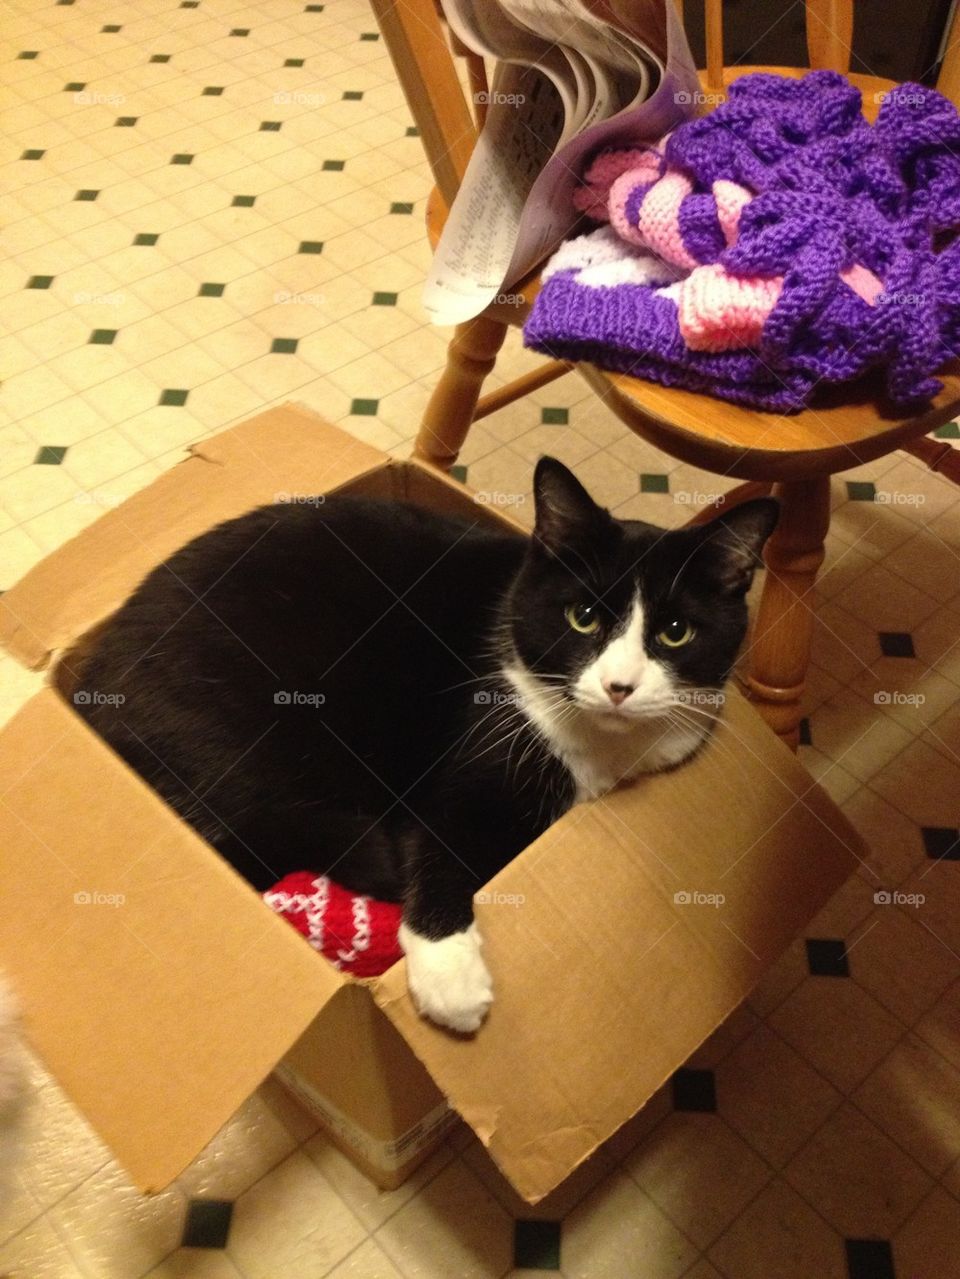 Riley in the box